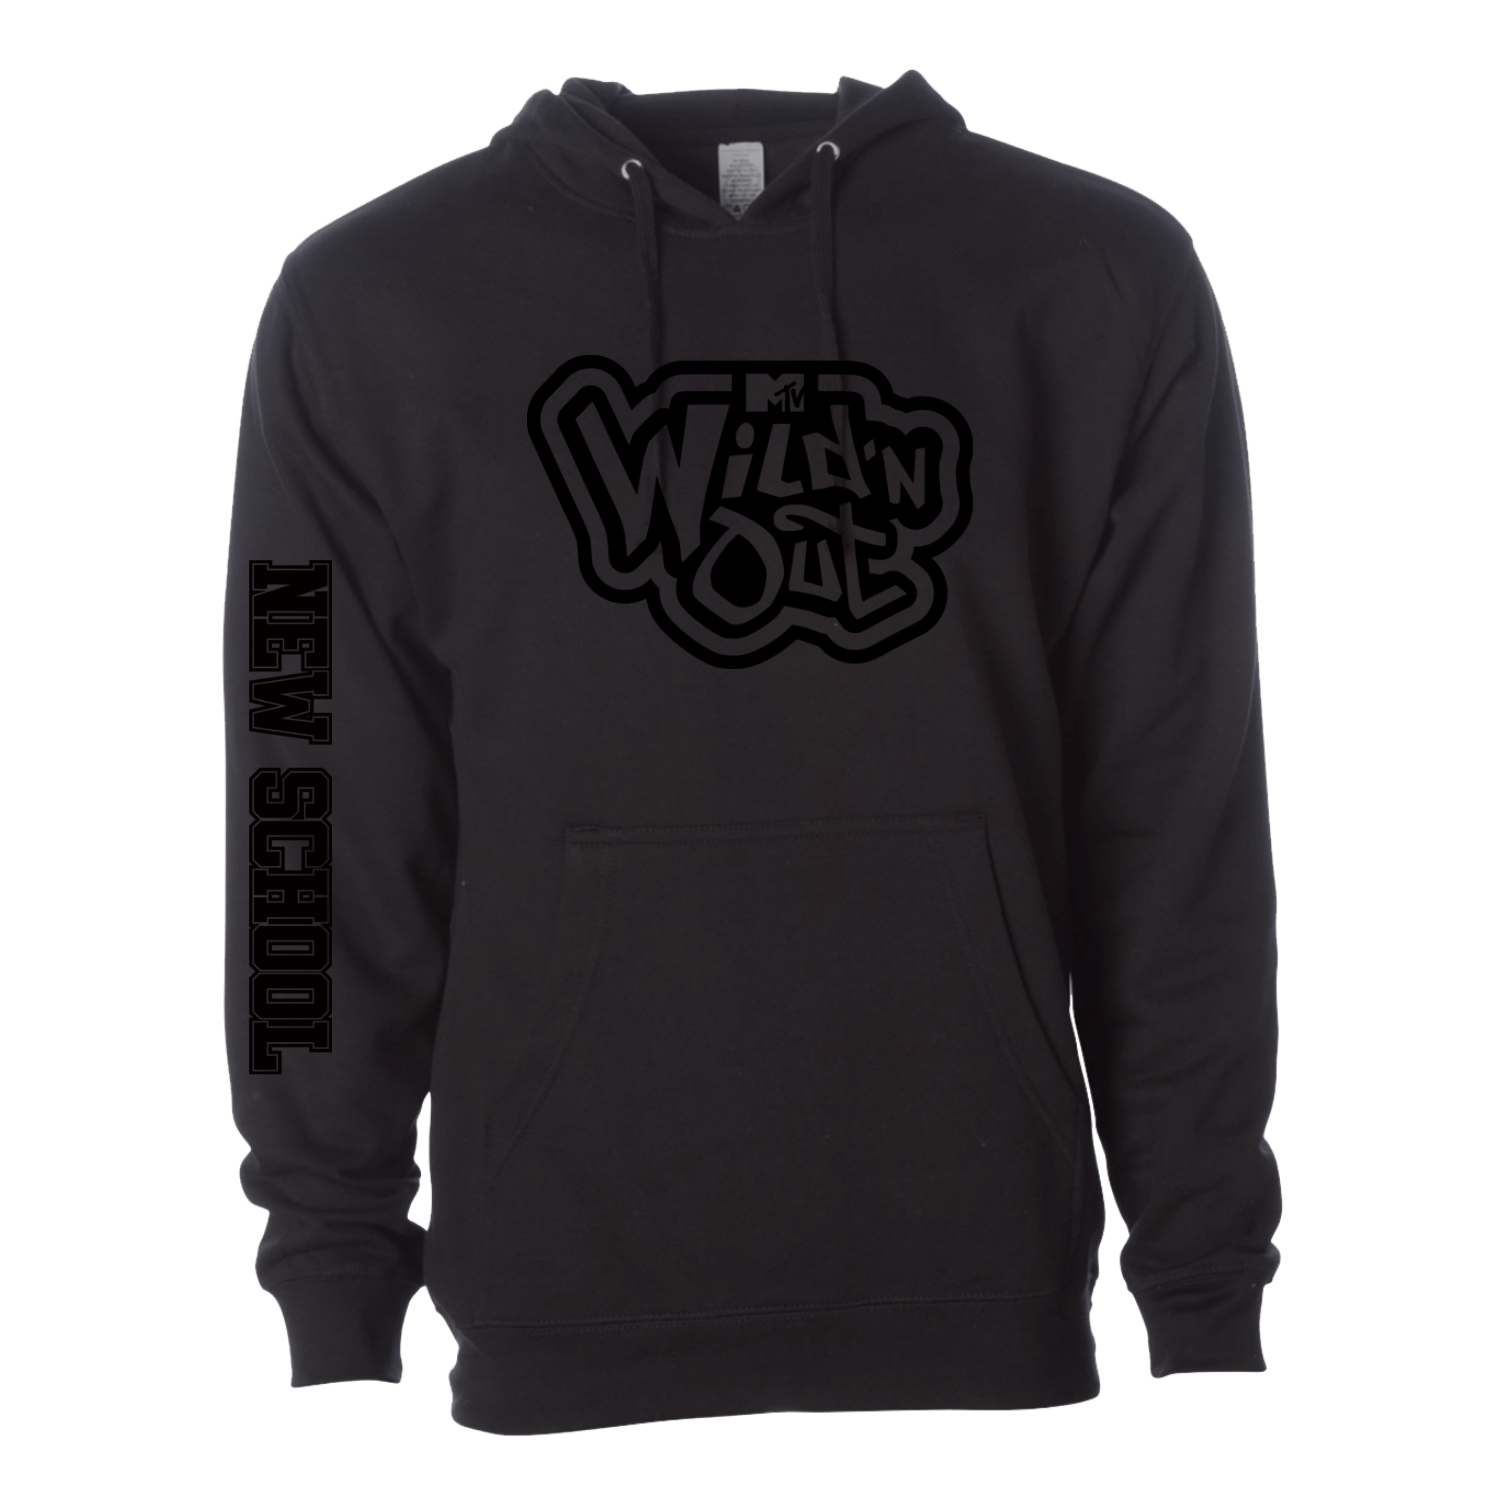 Wild 'N Out Black on Black New School Side Hooded Sweatshirt - Paramount Shop